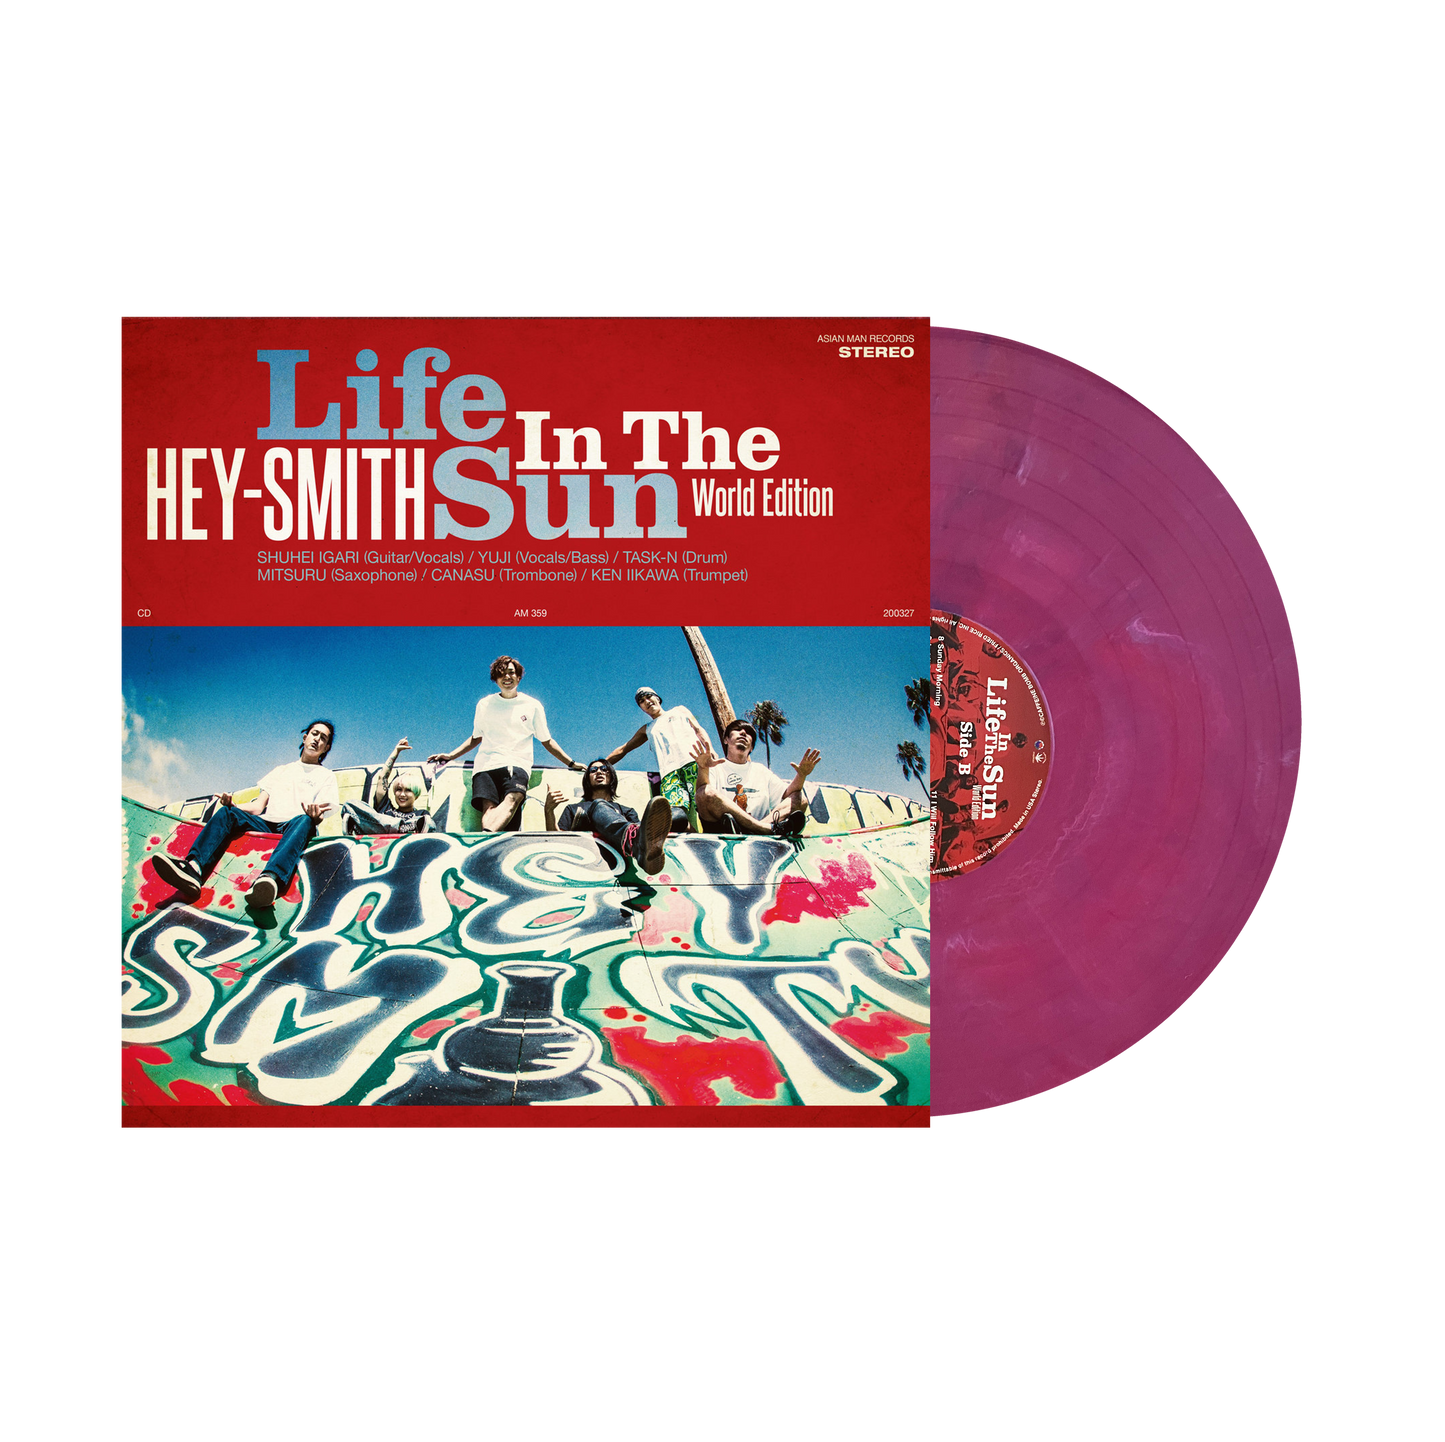 Hey-Smith "Life In The Sun" LP